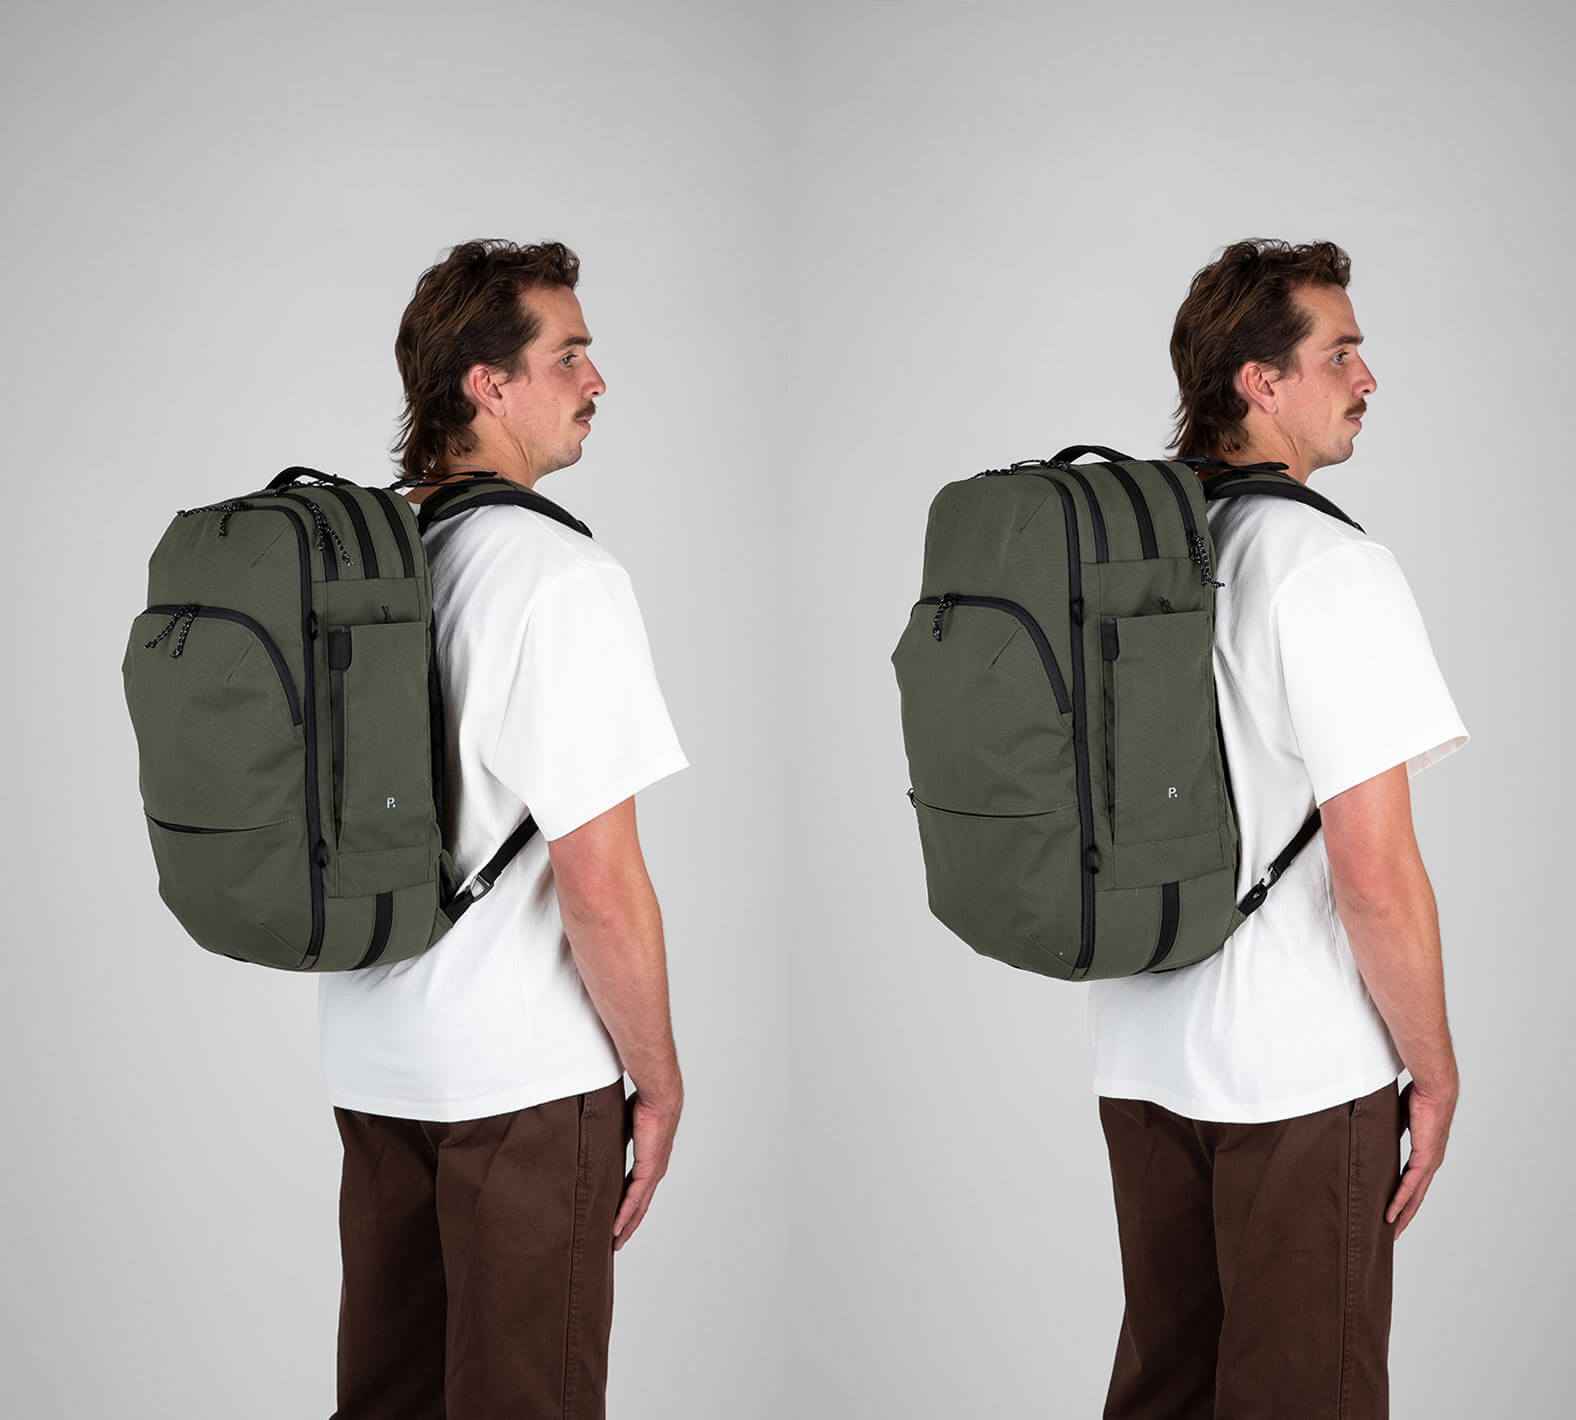 man wearing green travel backpack